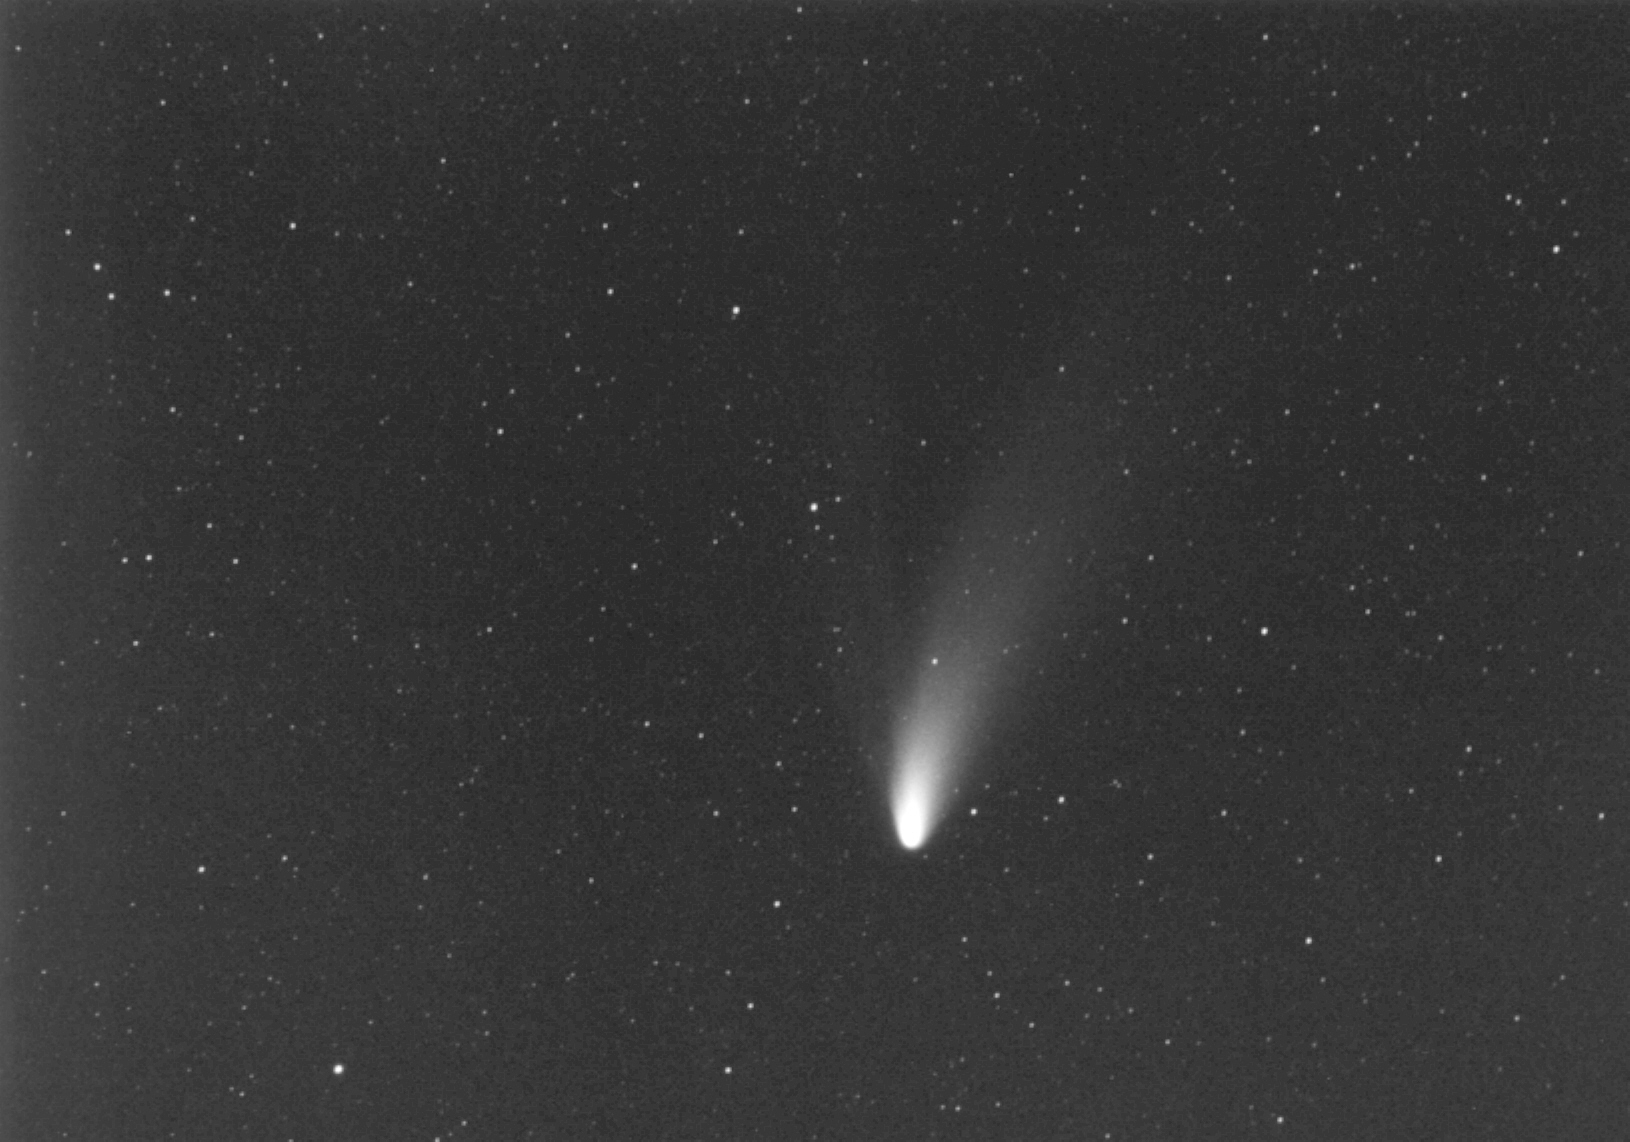 Another photo of Comet Hale-Bopp. Photo copyright Richard Pellessier